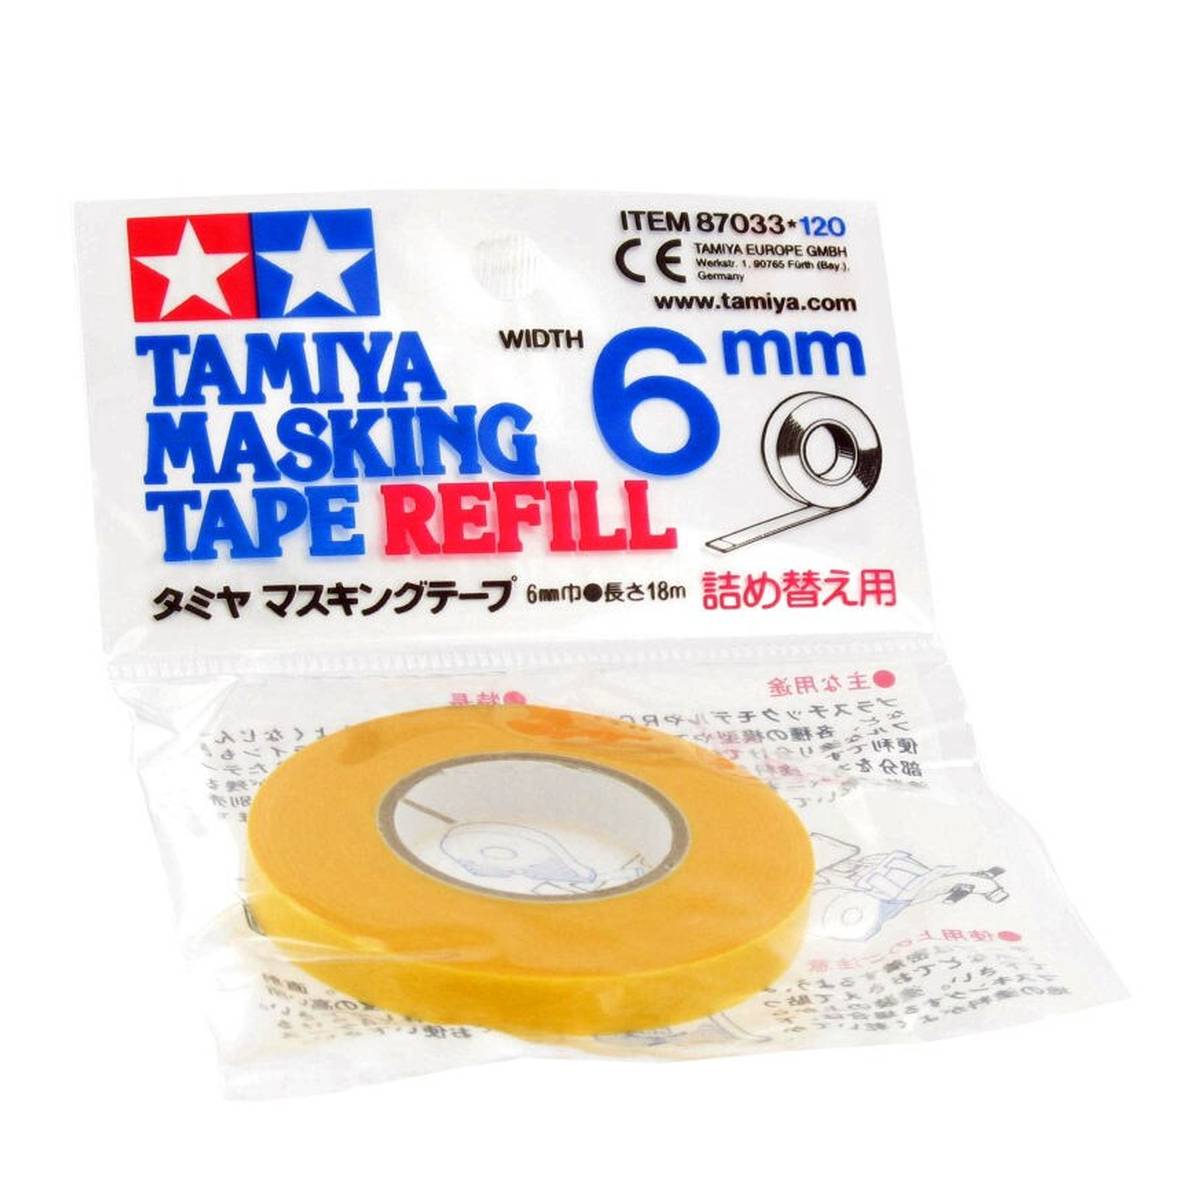 Tamiya 87033 Masking Tape Refill 6mm for sale online 